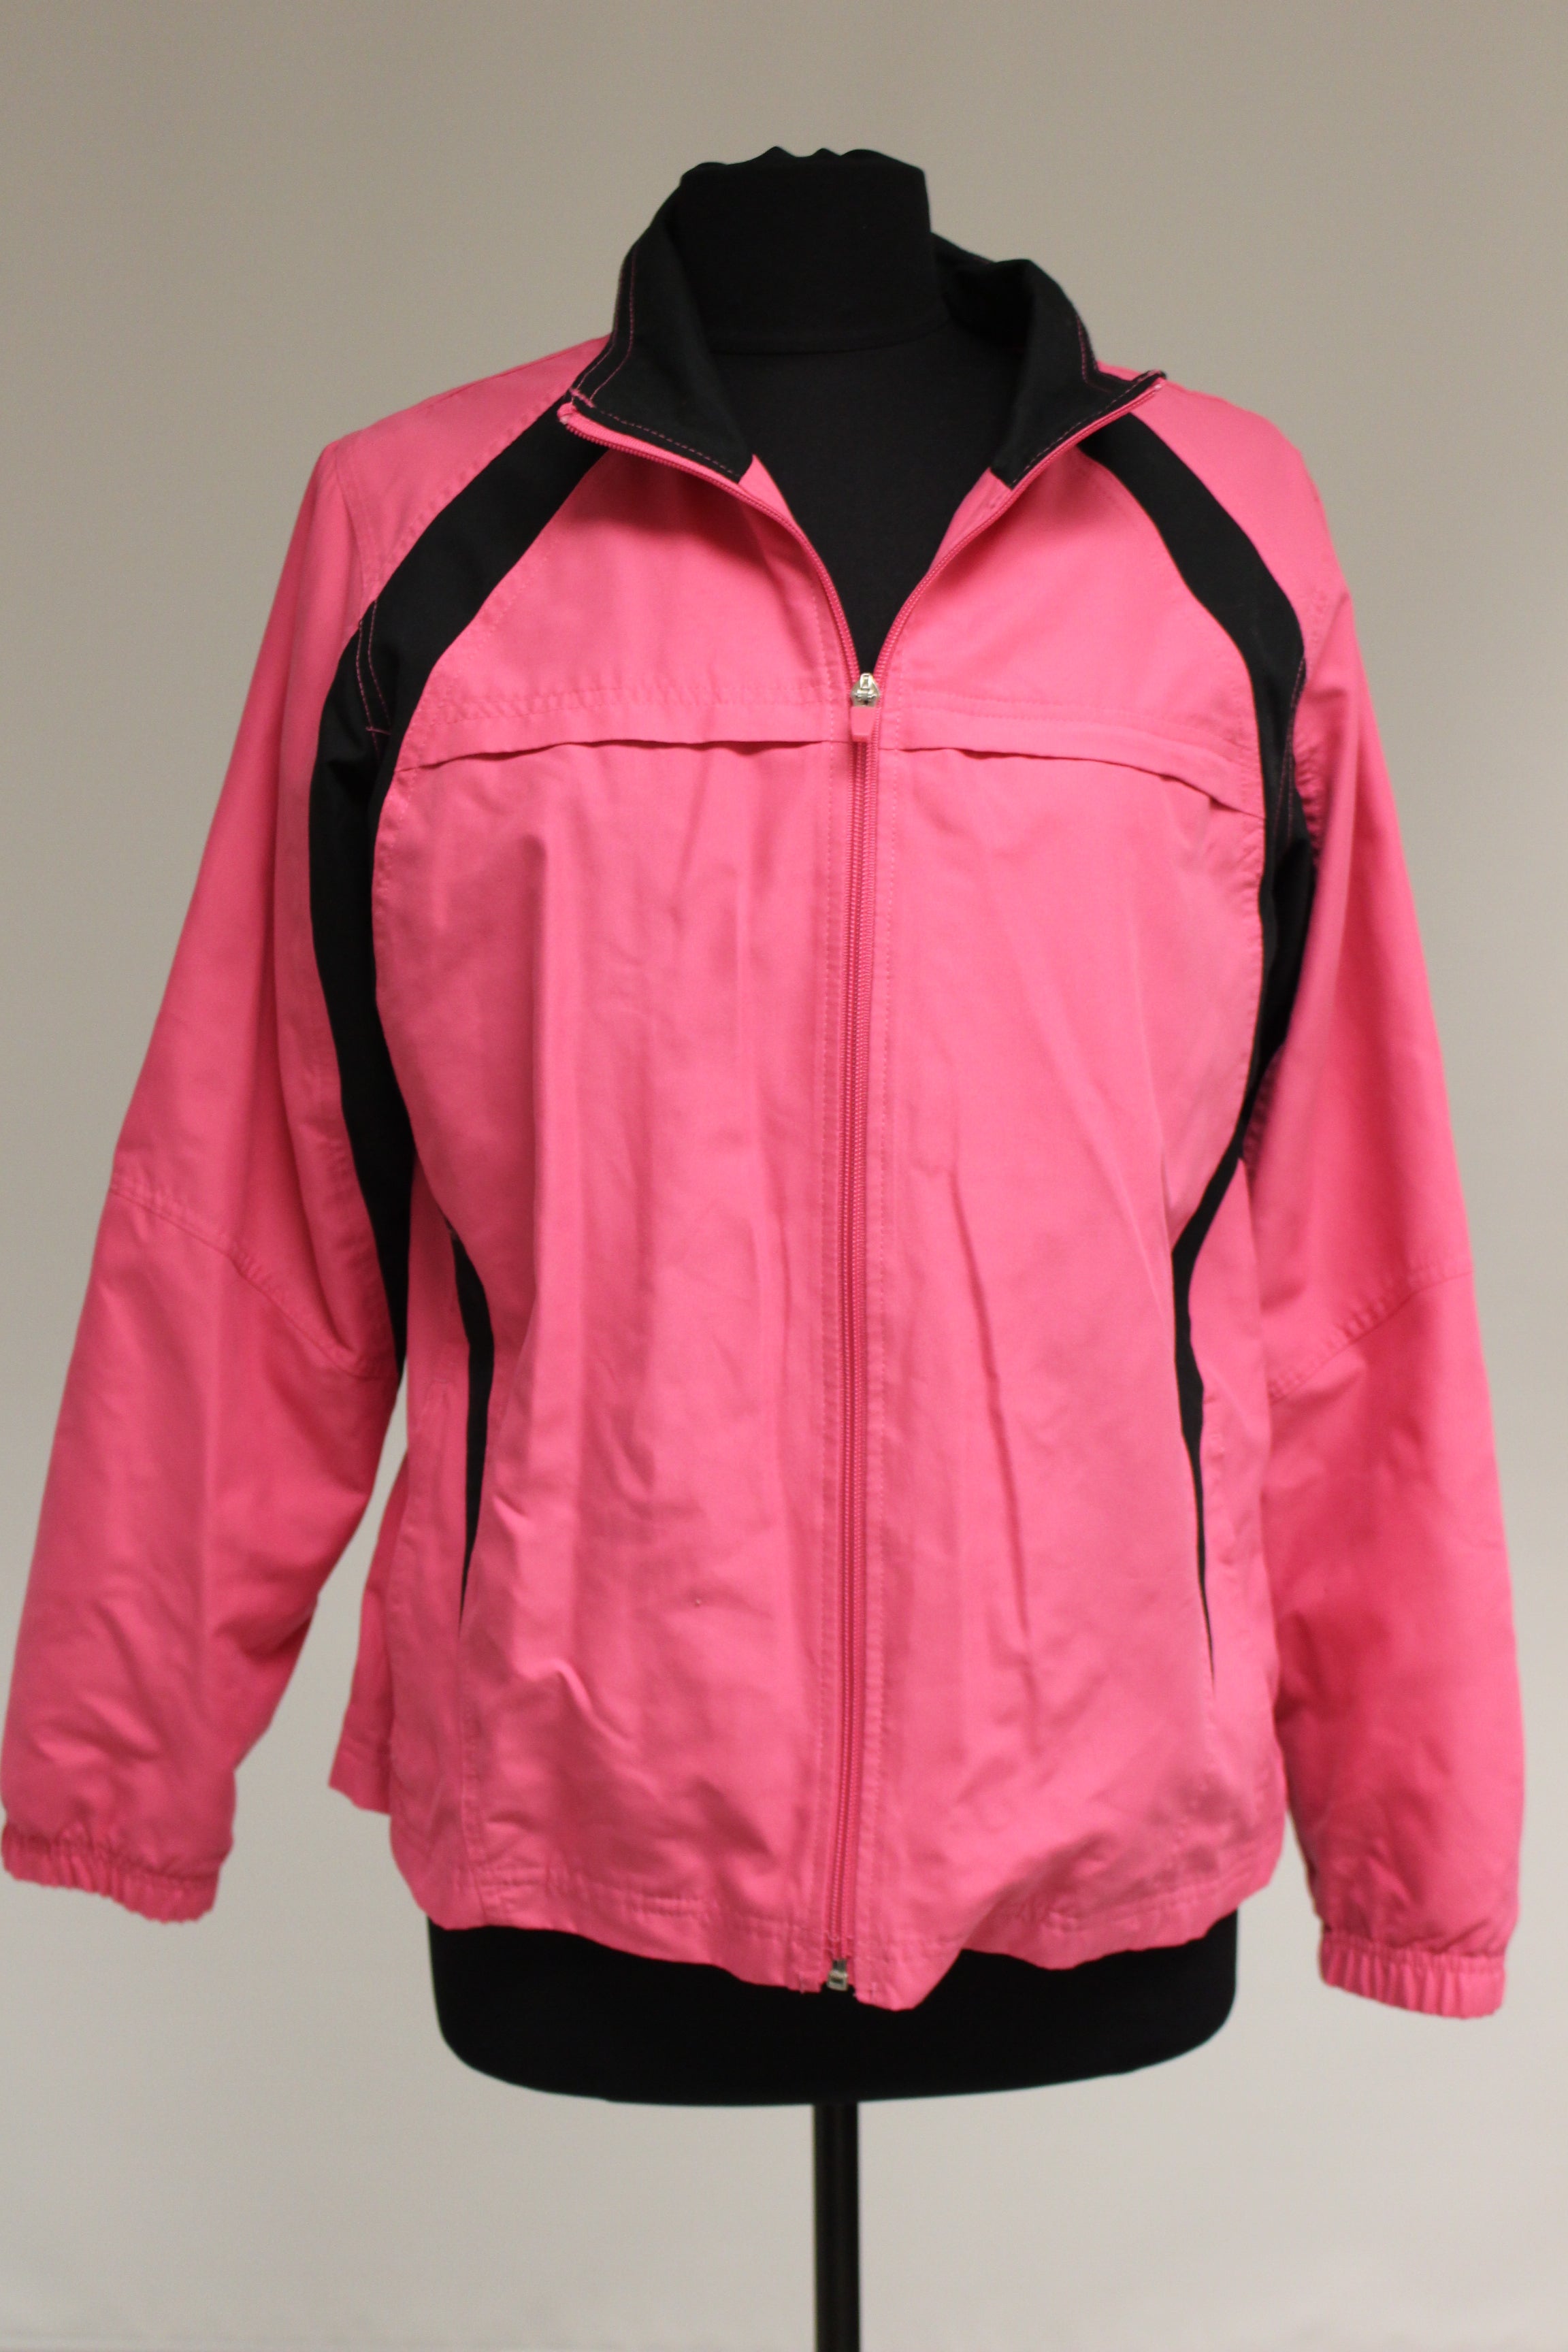 TeK Gear Warm Tek Puffer Jacket Size M Pink